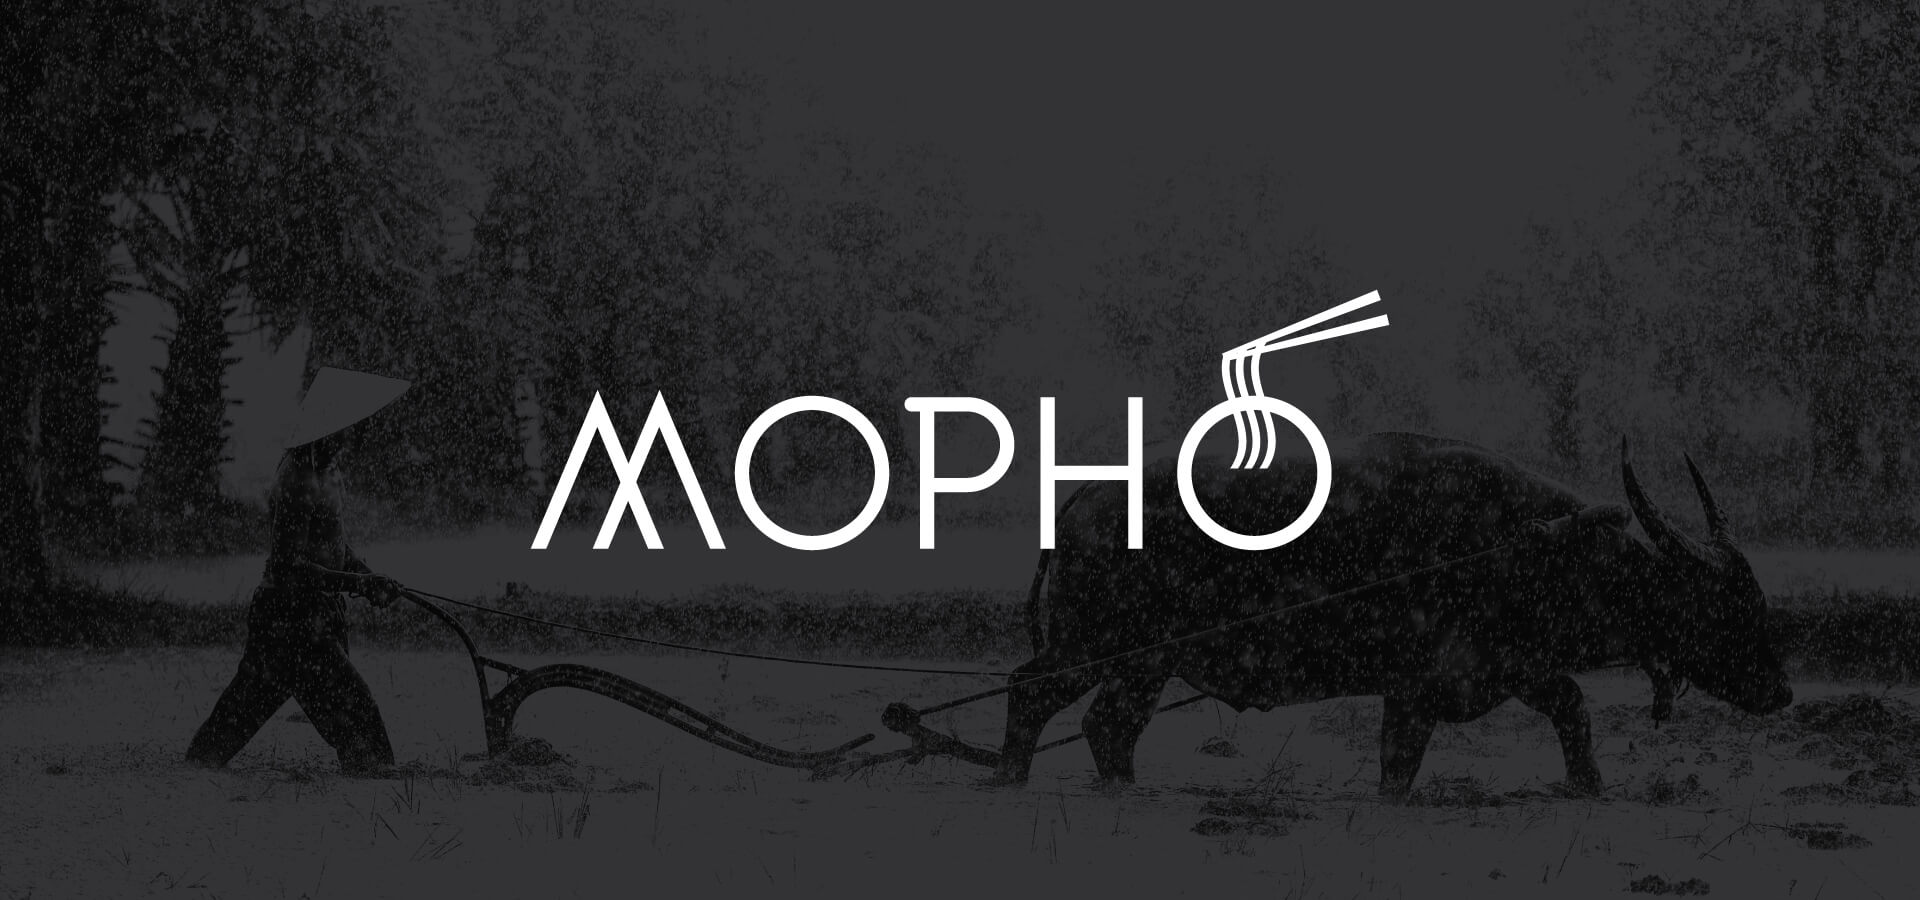 Mopho Logo and brand identity